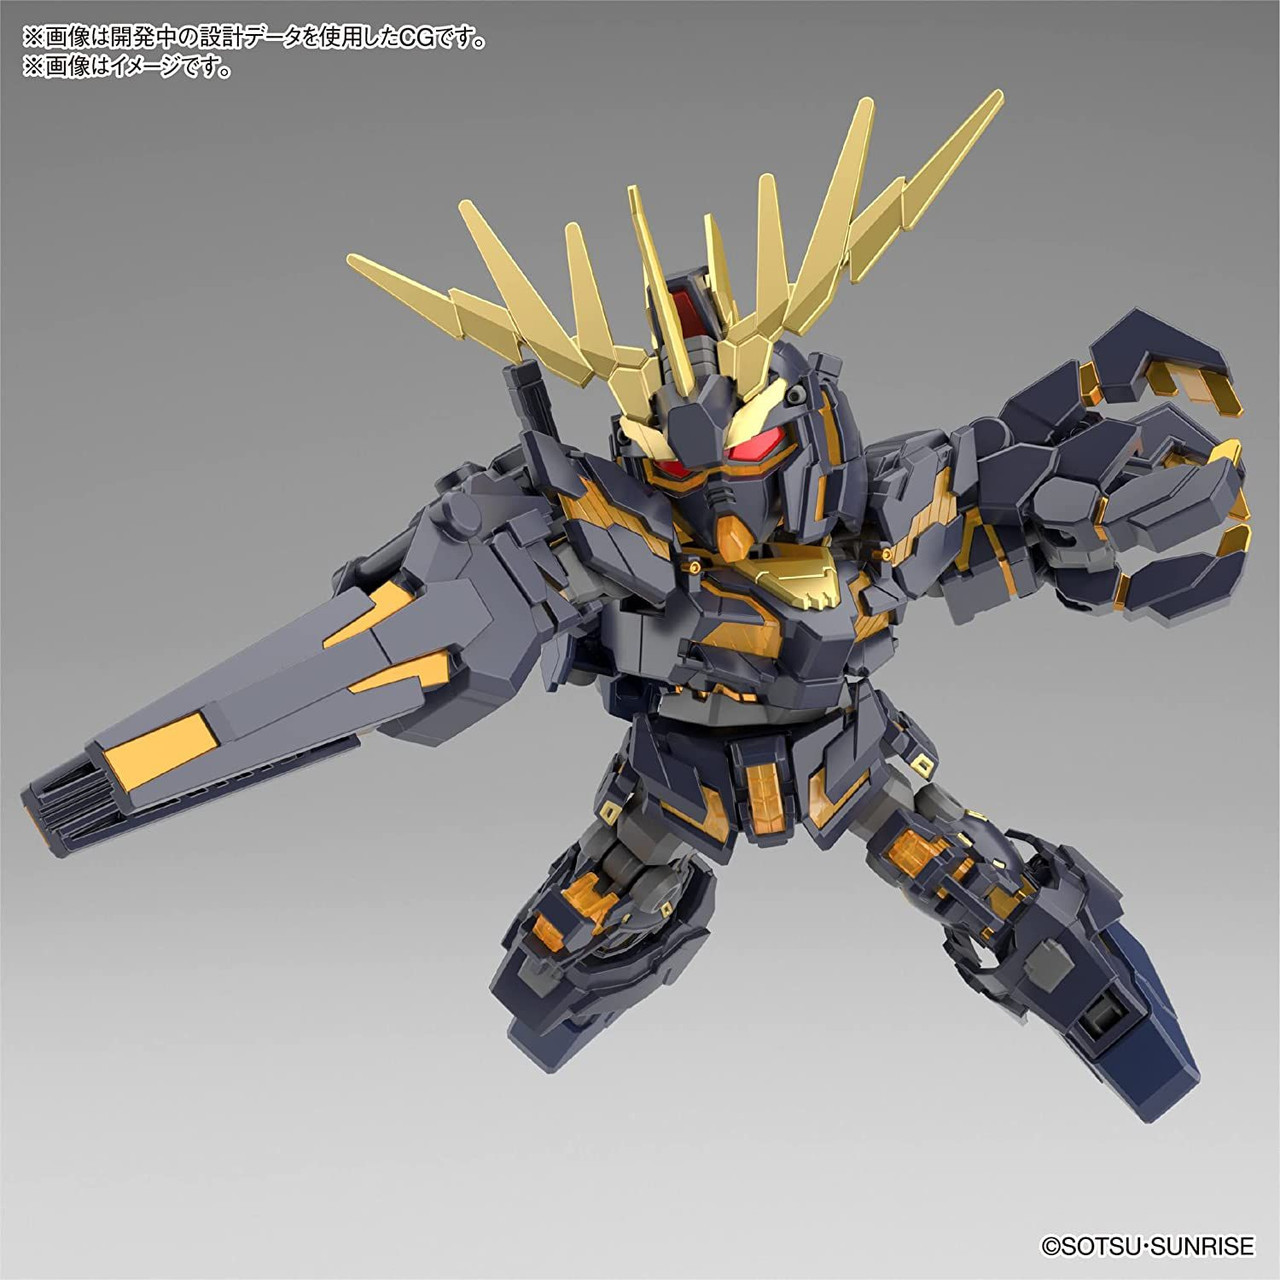 2588122 Bandai SD Cross Silhouette Unicorn Gundam 02 Banshee Destroy Mode & Banshee Norn Parts Set